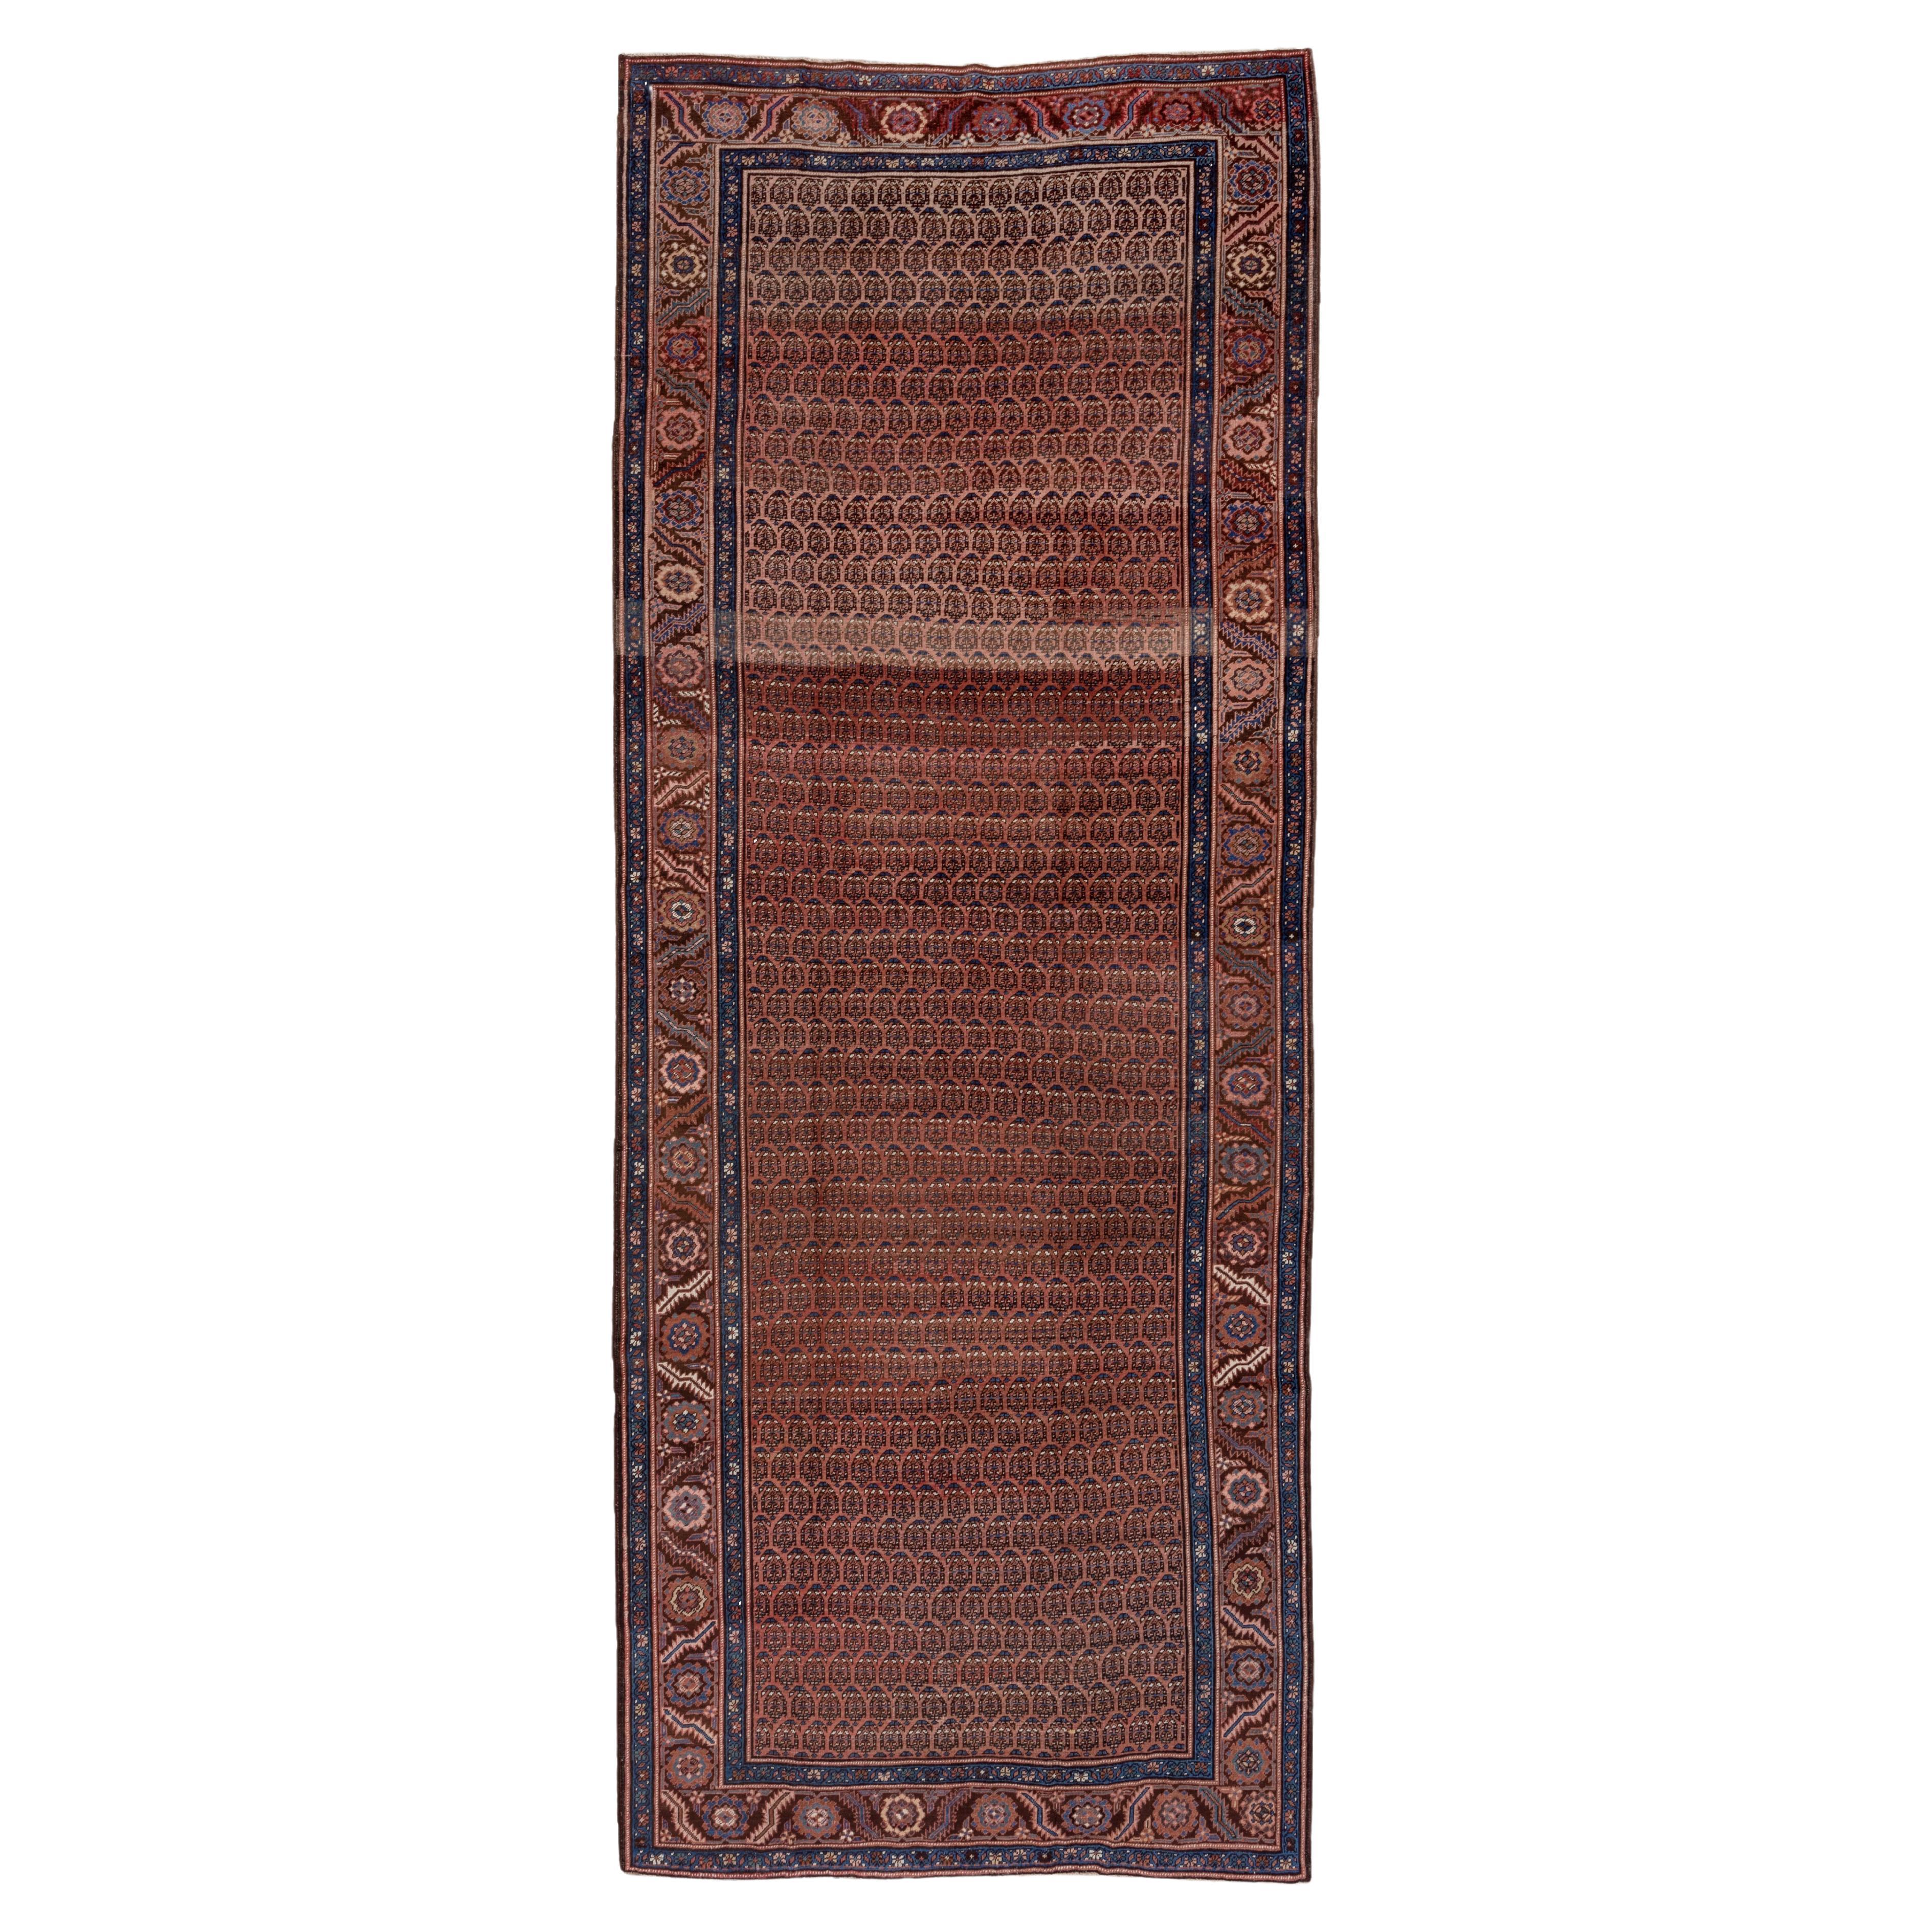 Antique Bakshayesh Heriz Long Carpet, Camel Toned Field 